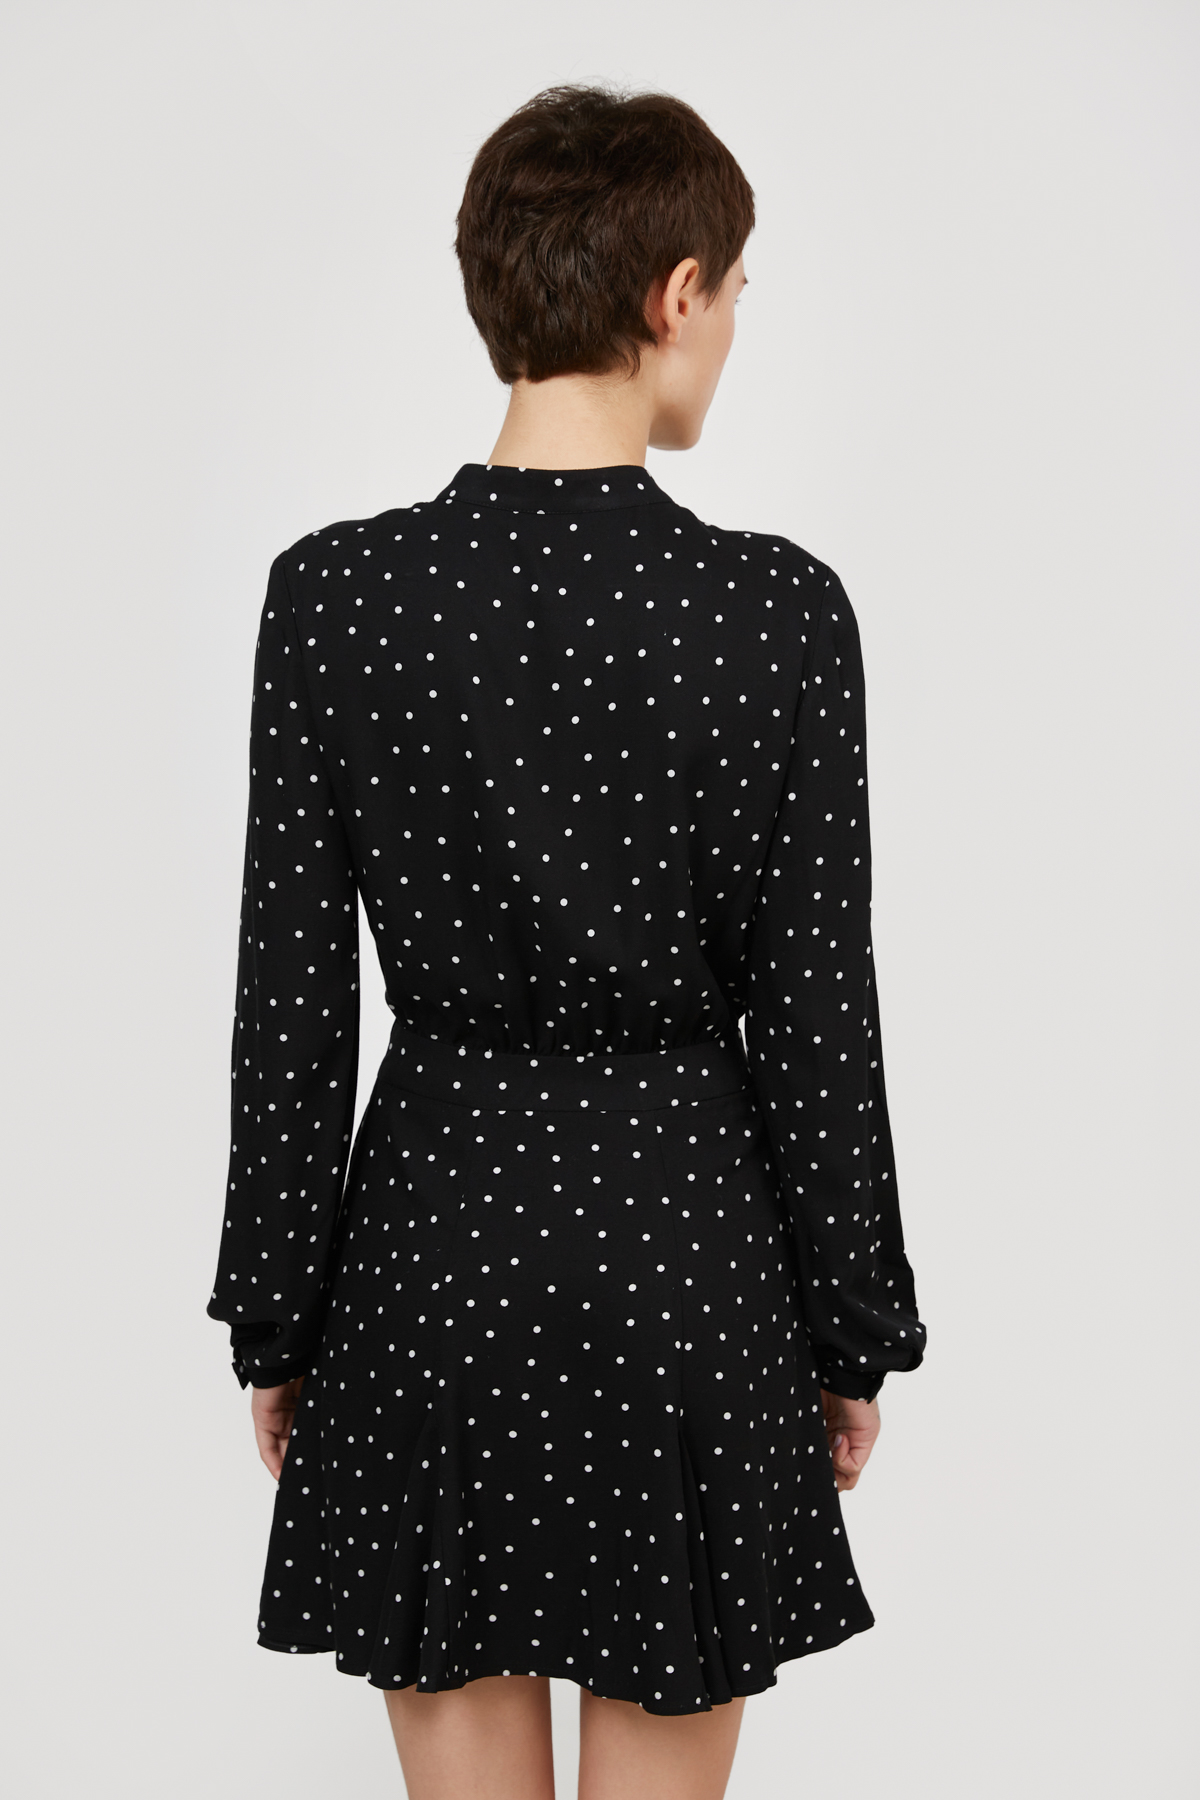 Viscose short dress black in white polka dots print, photo 4